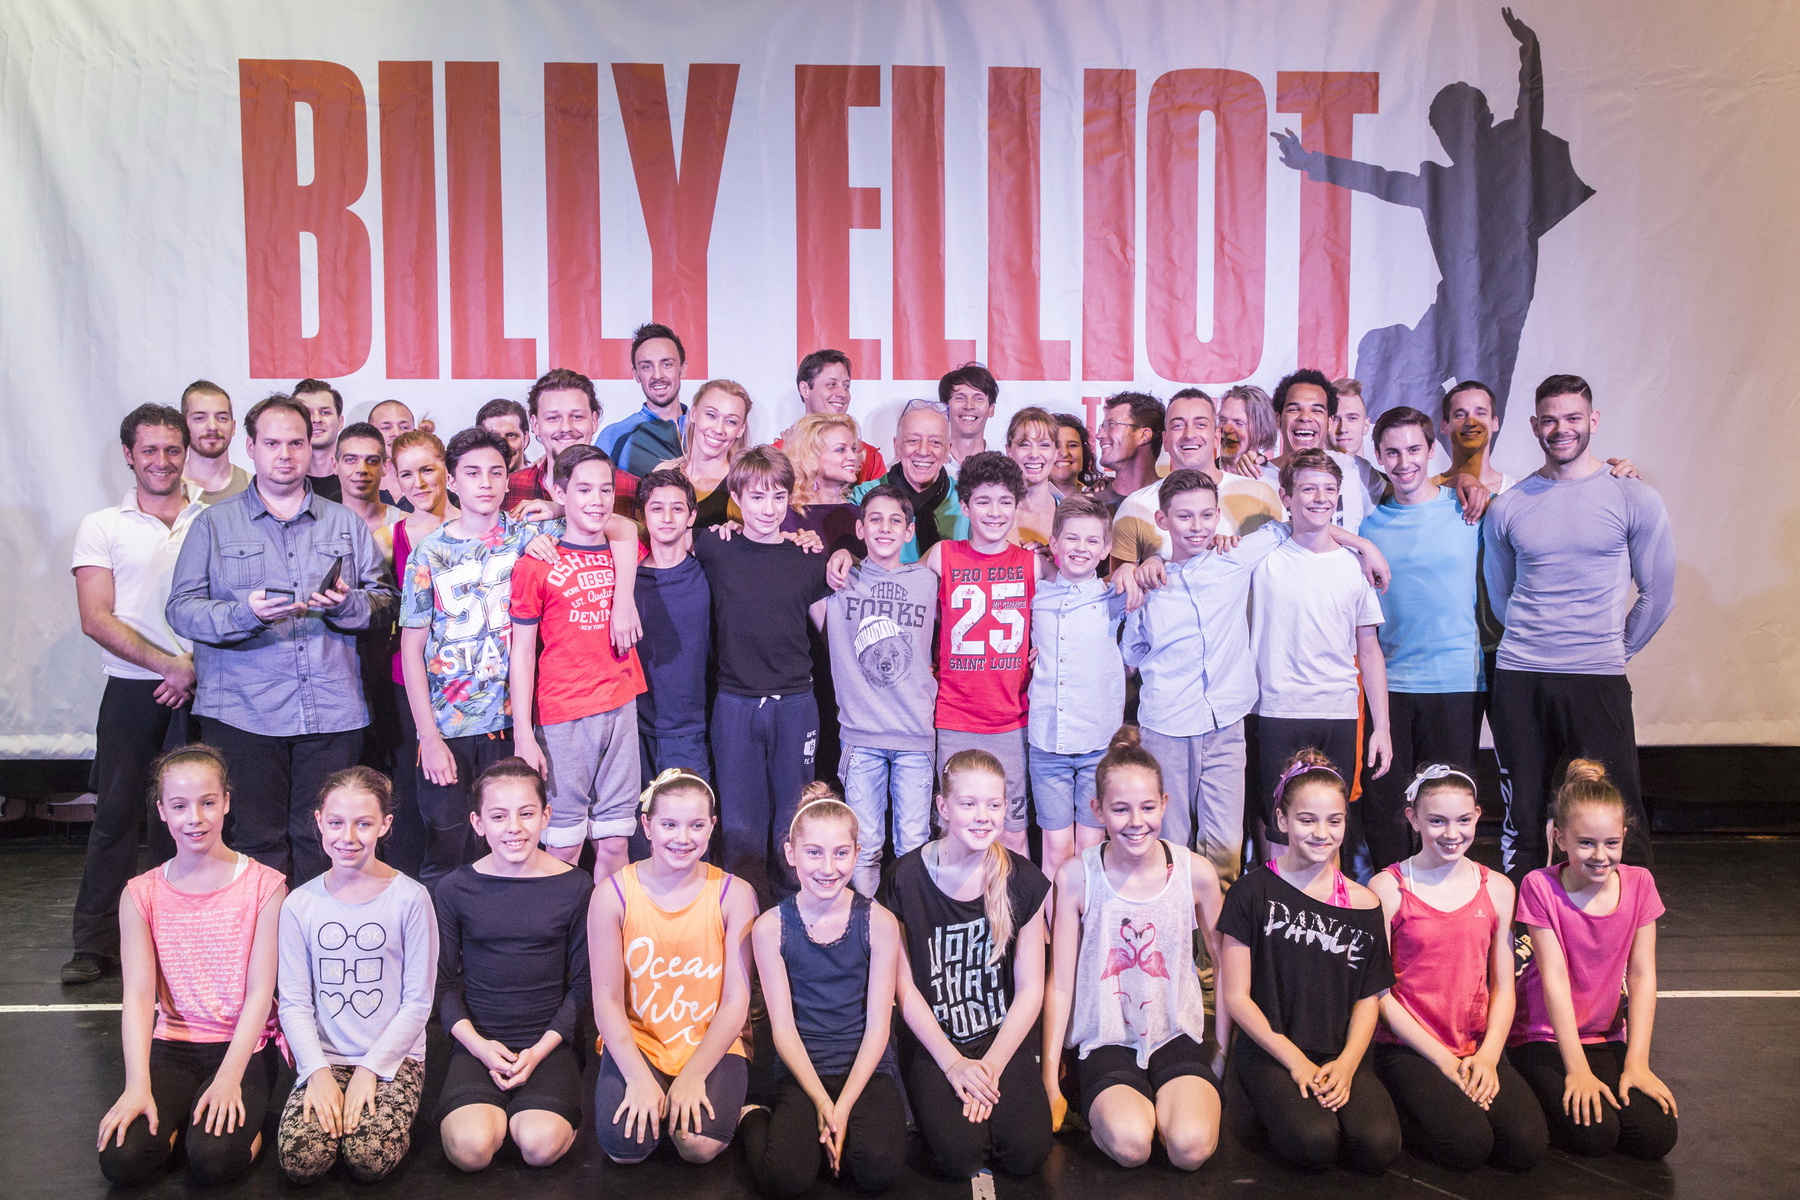 Billy Elliot a Musical sajtotajekoztato foto Palyi Zsofia